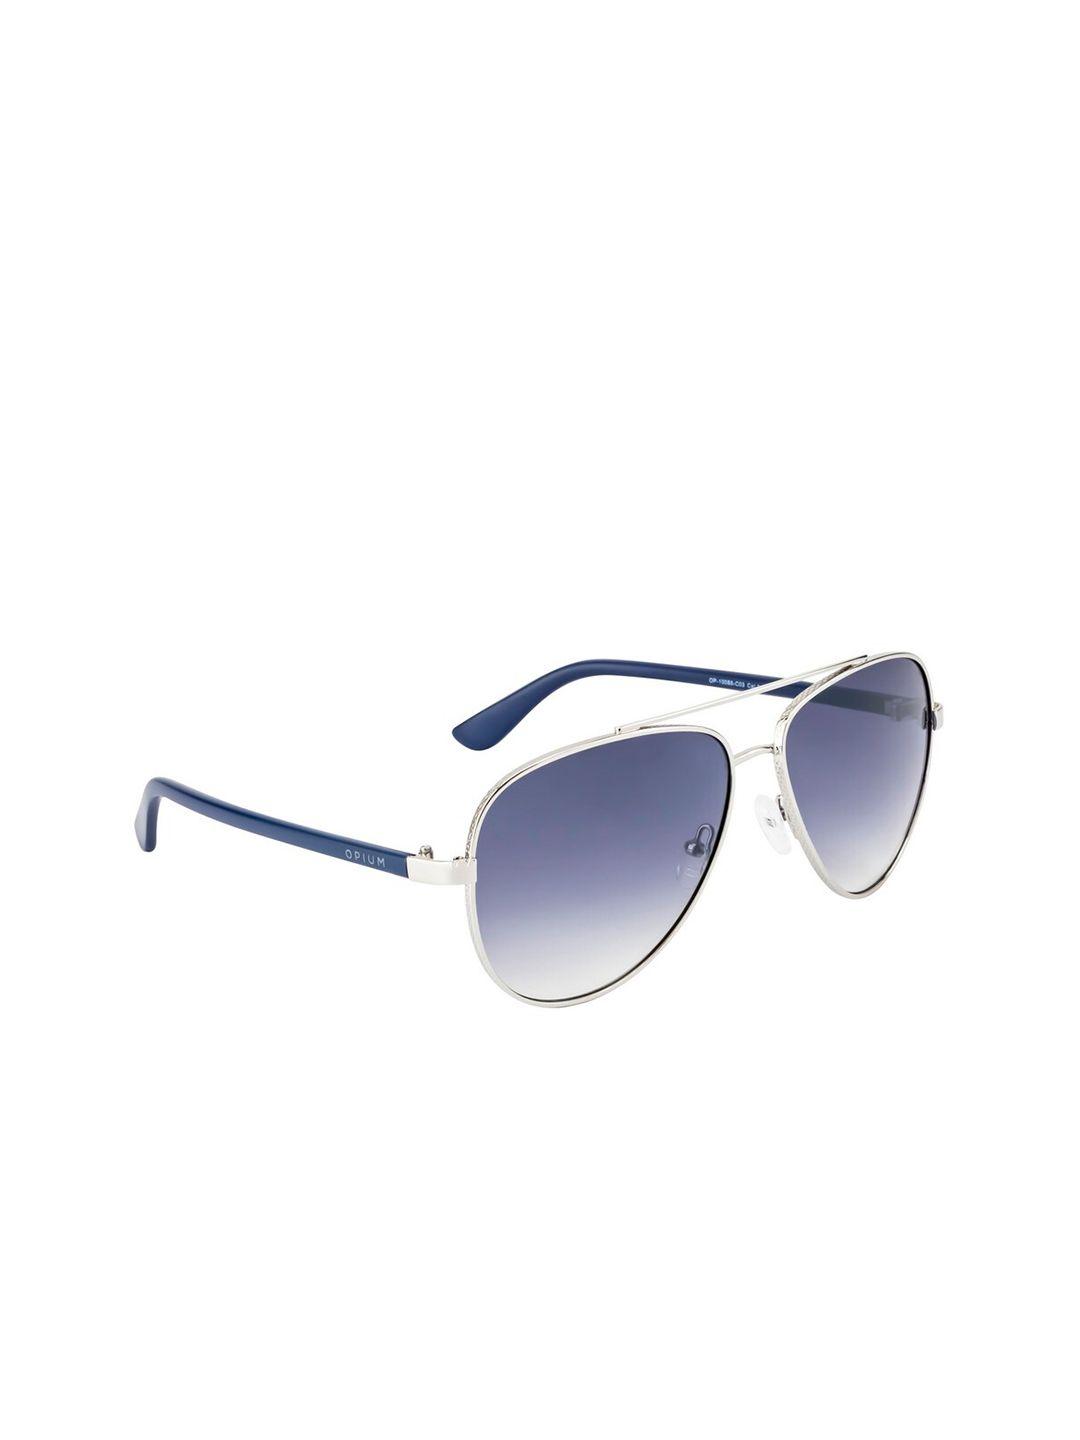 opium men grey lens & silver-toned aviator sunglasses with uv protected lens